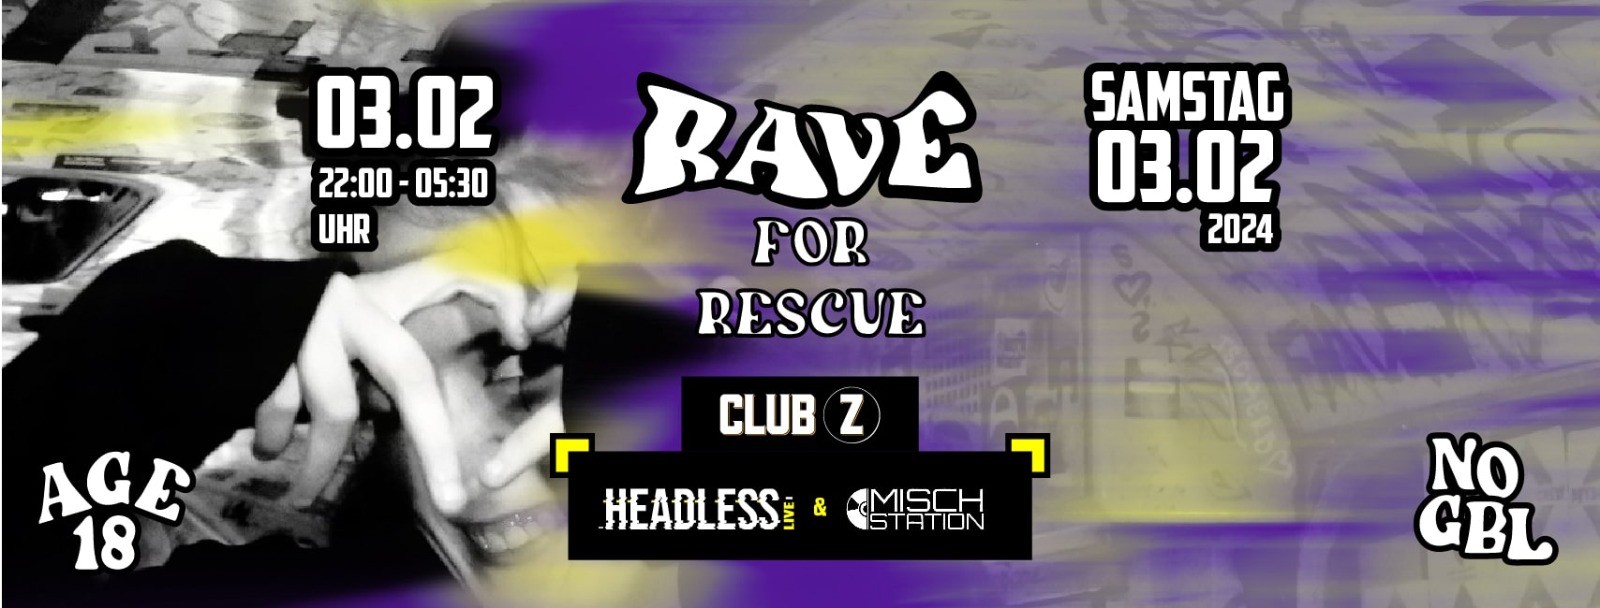 Samstag, 03.02.2024, 22Uhr bis 5:30Uhr, Rave for Rescue, Club Z, Headless live, Mischstation, No GBL, Club Z, Köln